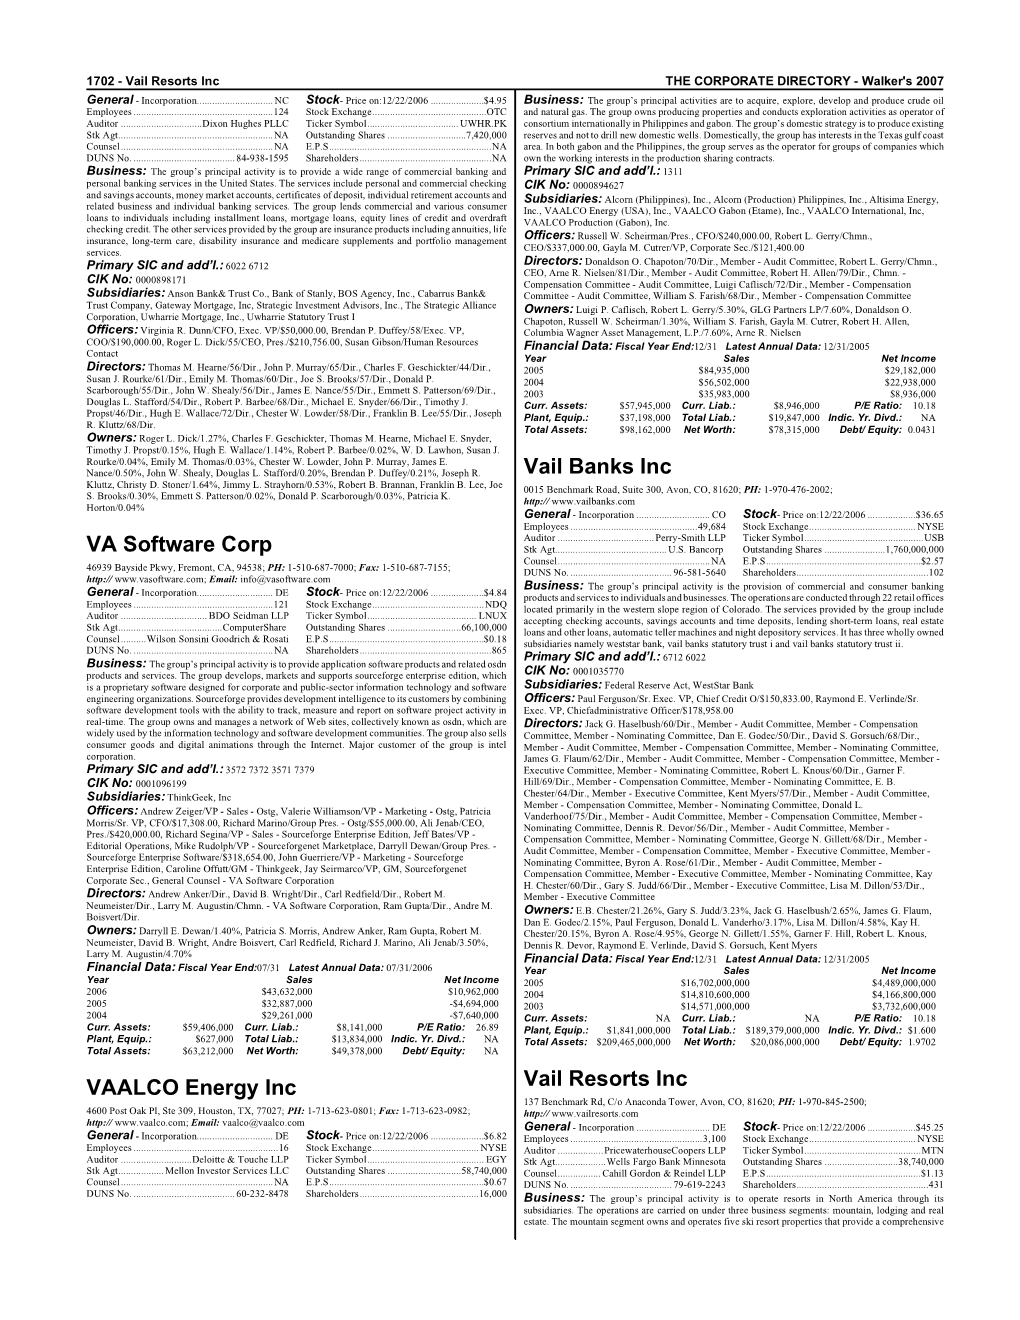 VA Software Corp VAALCO Energy Inc Vail Banks Inc Vail Resorts